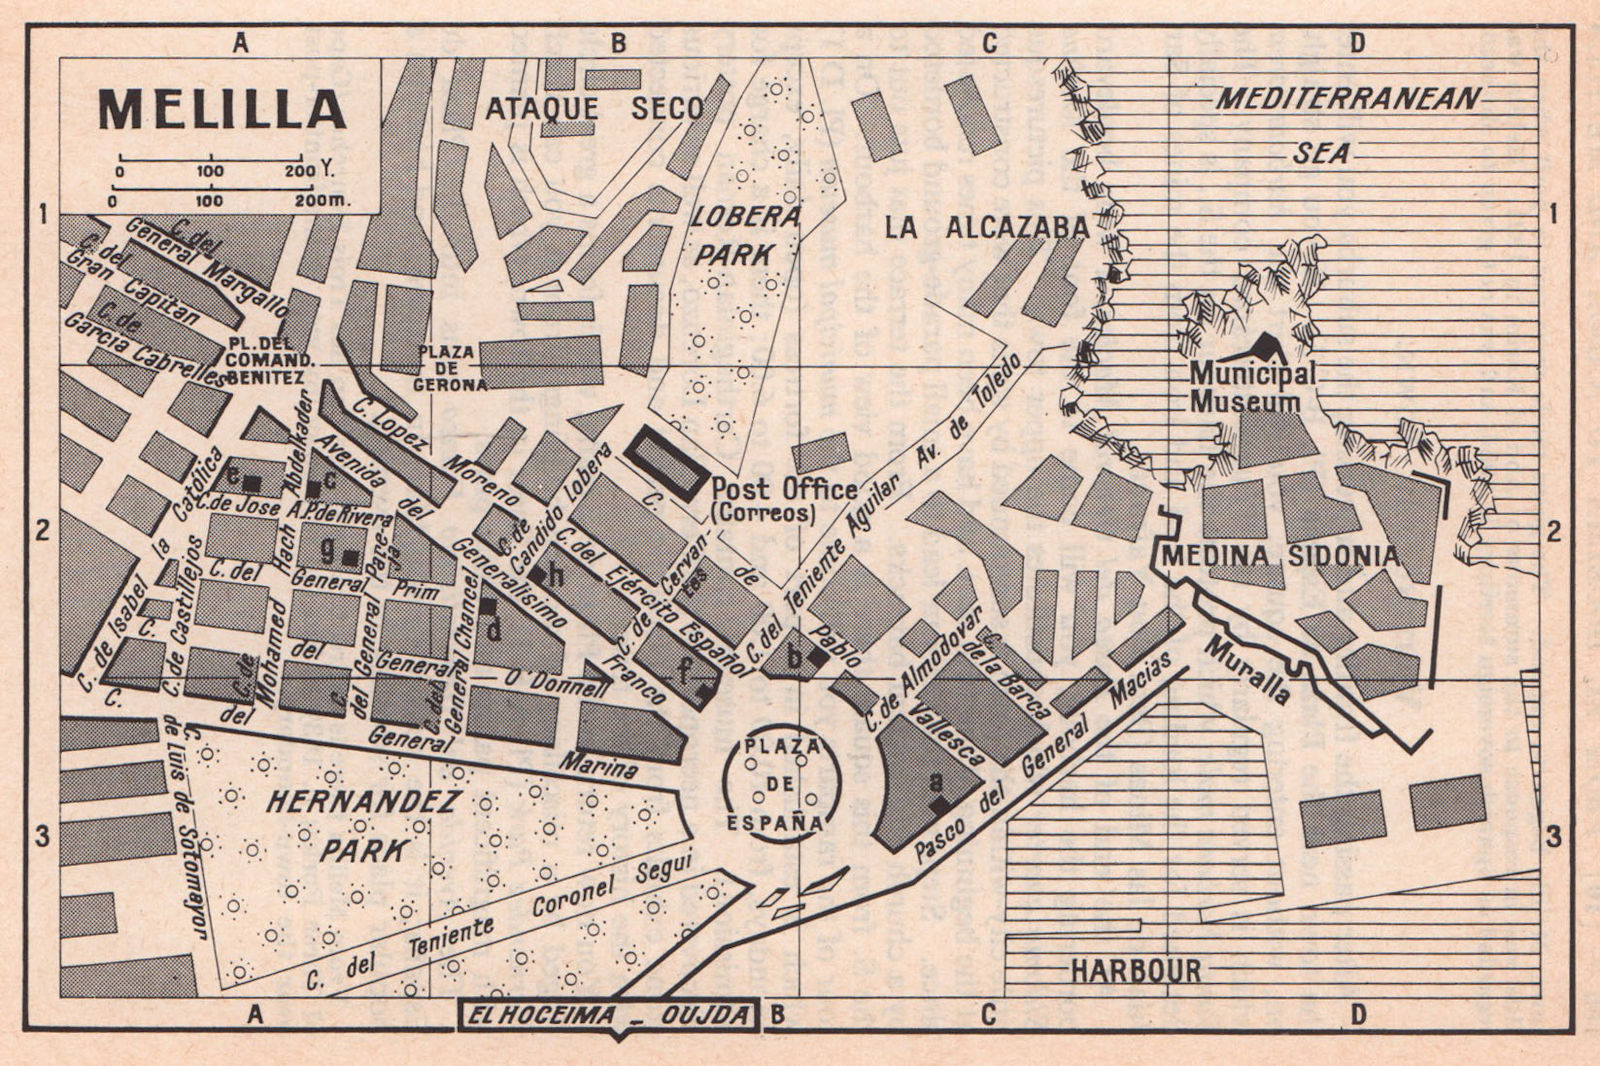 Melilla vintage town city tourist plan. Spain / Morocco 1966 old vintage map